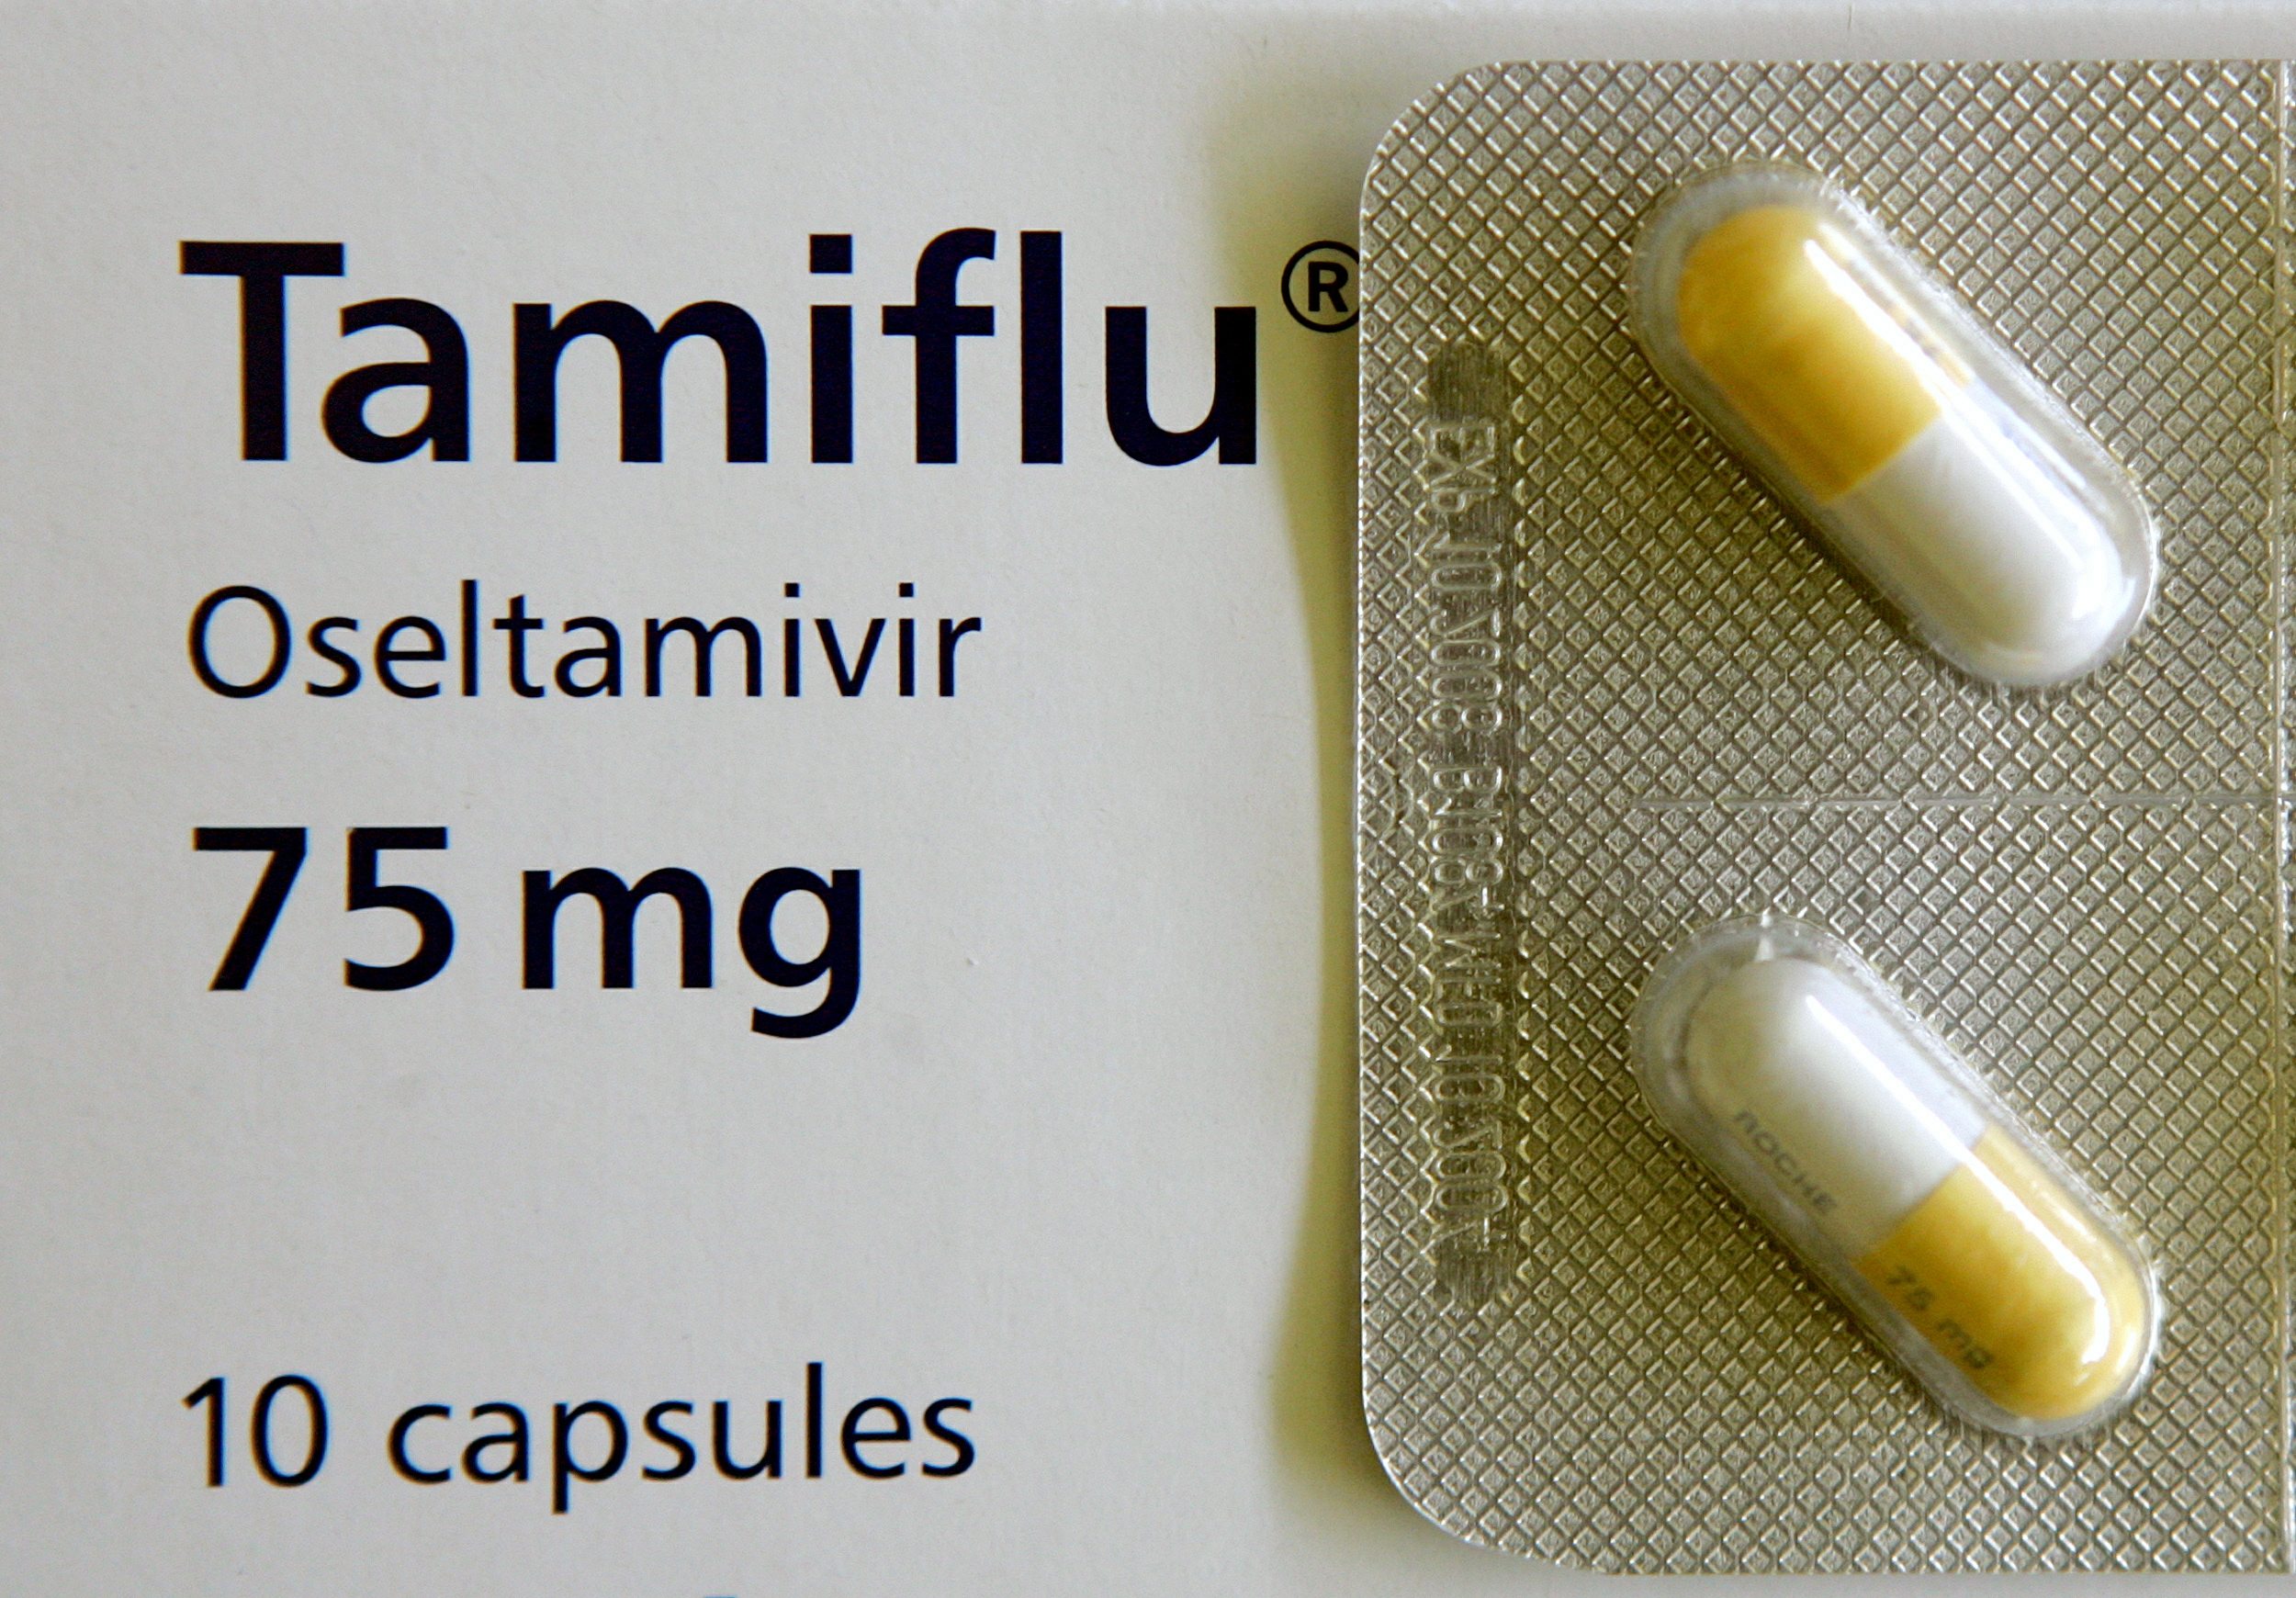 Tamiflu Mail In Rebate